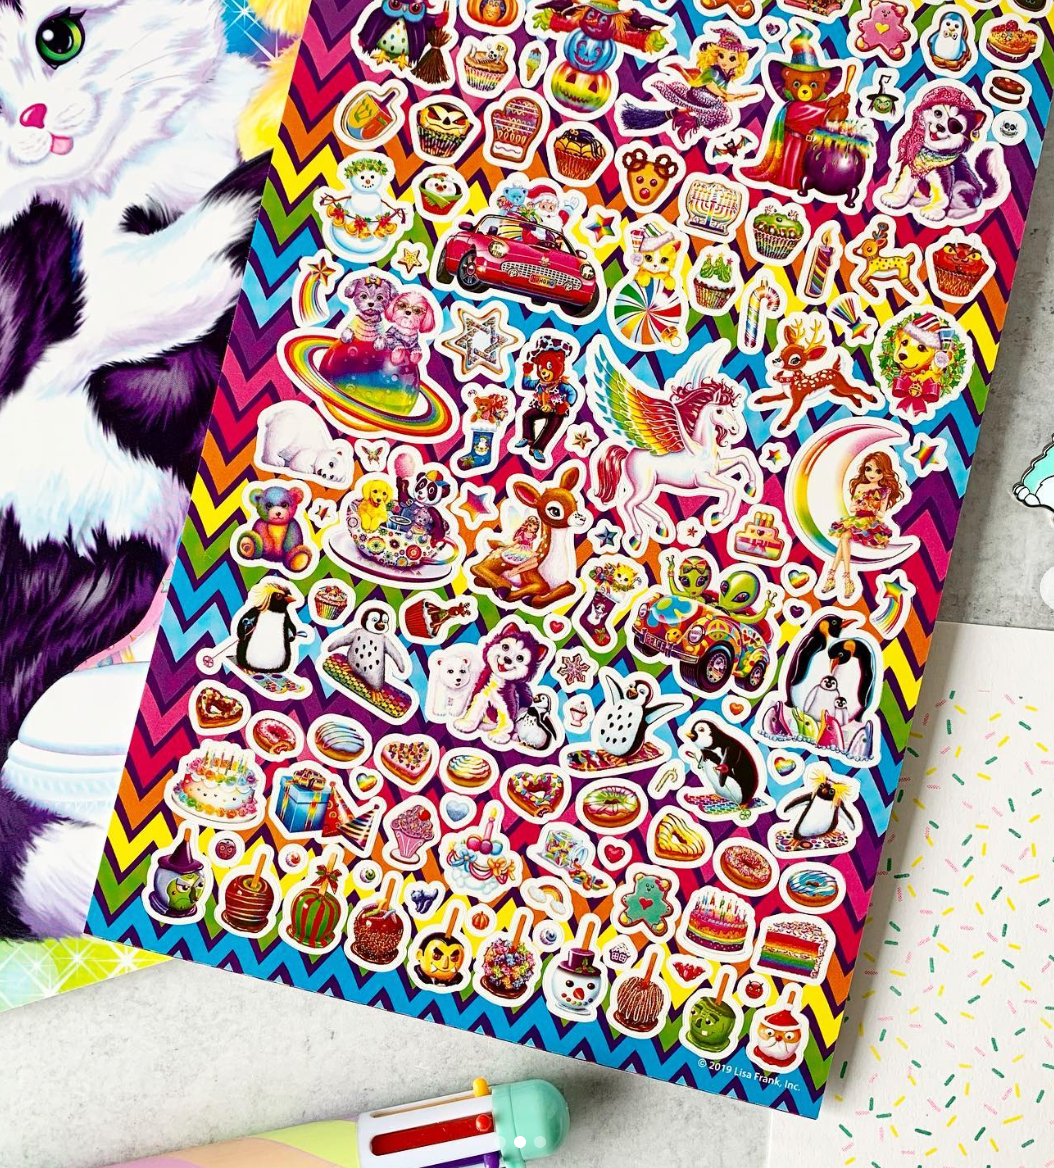 Lisa Frank Over 600 Stickers! – ratbone skinny